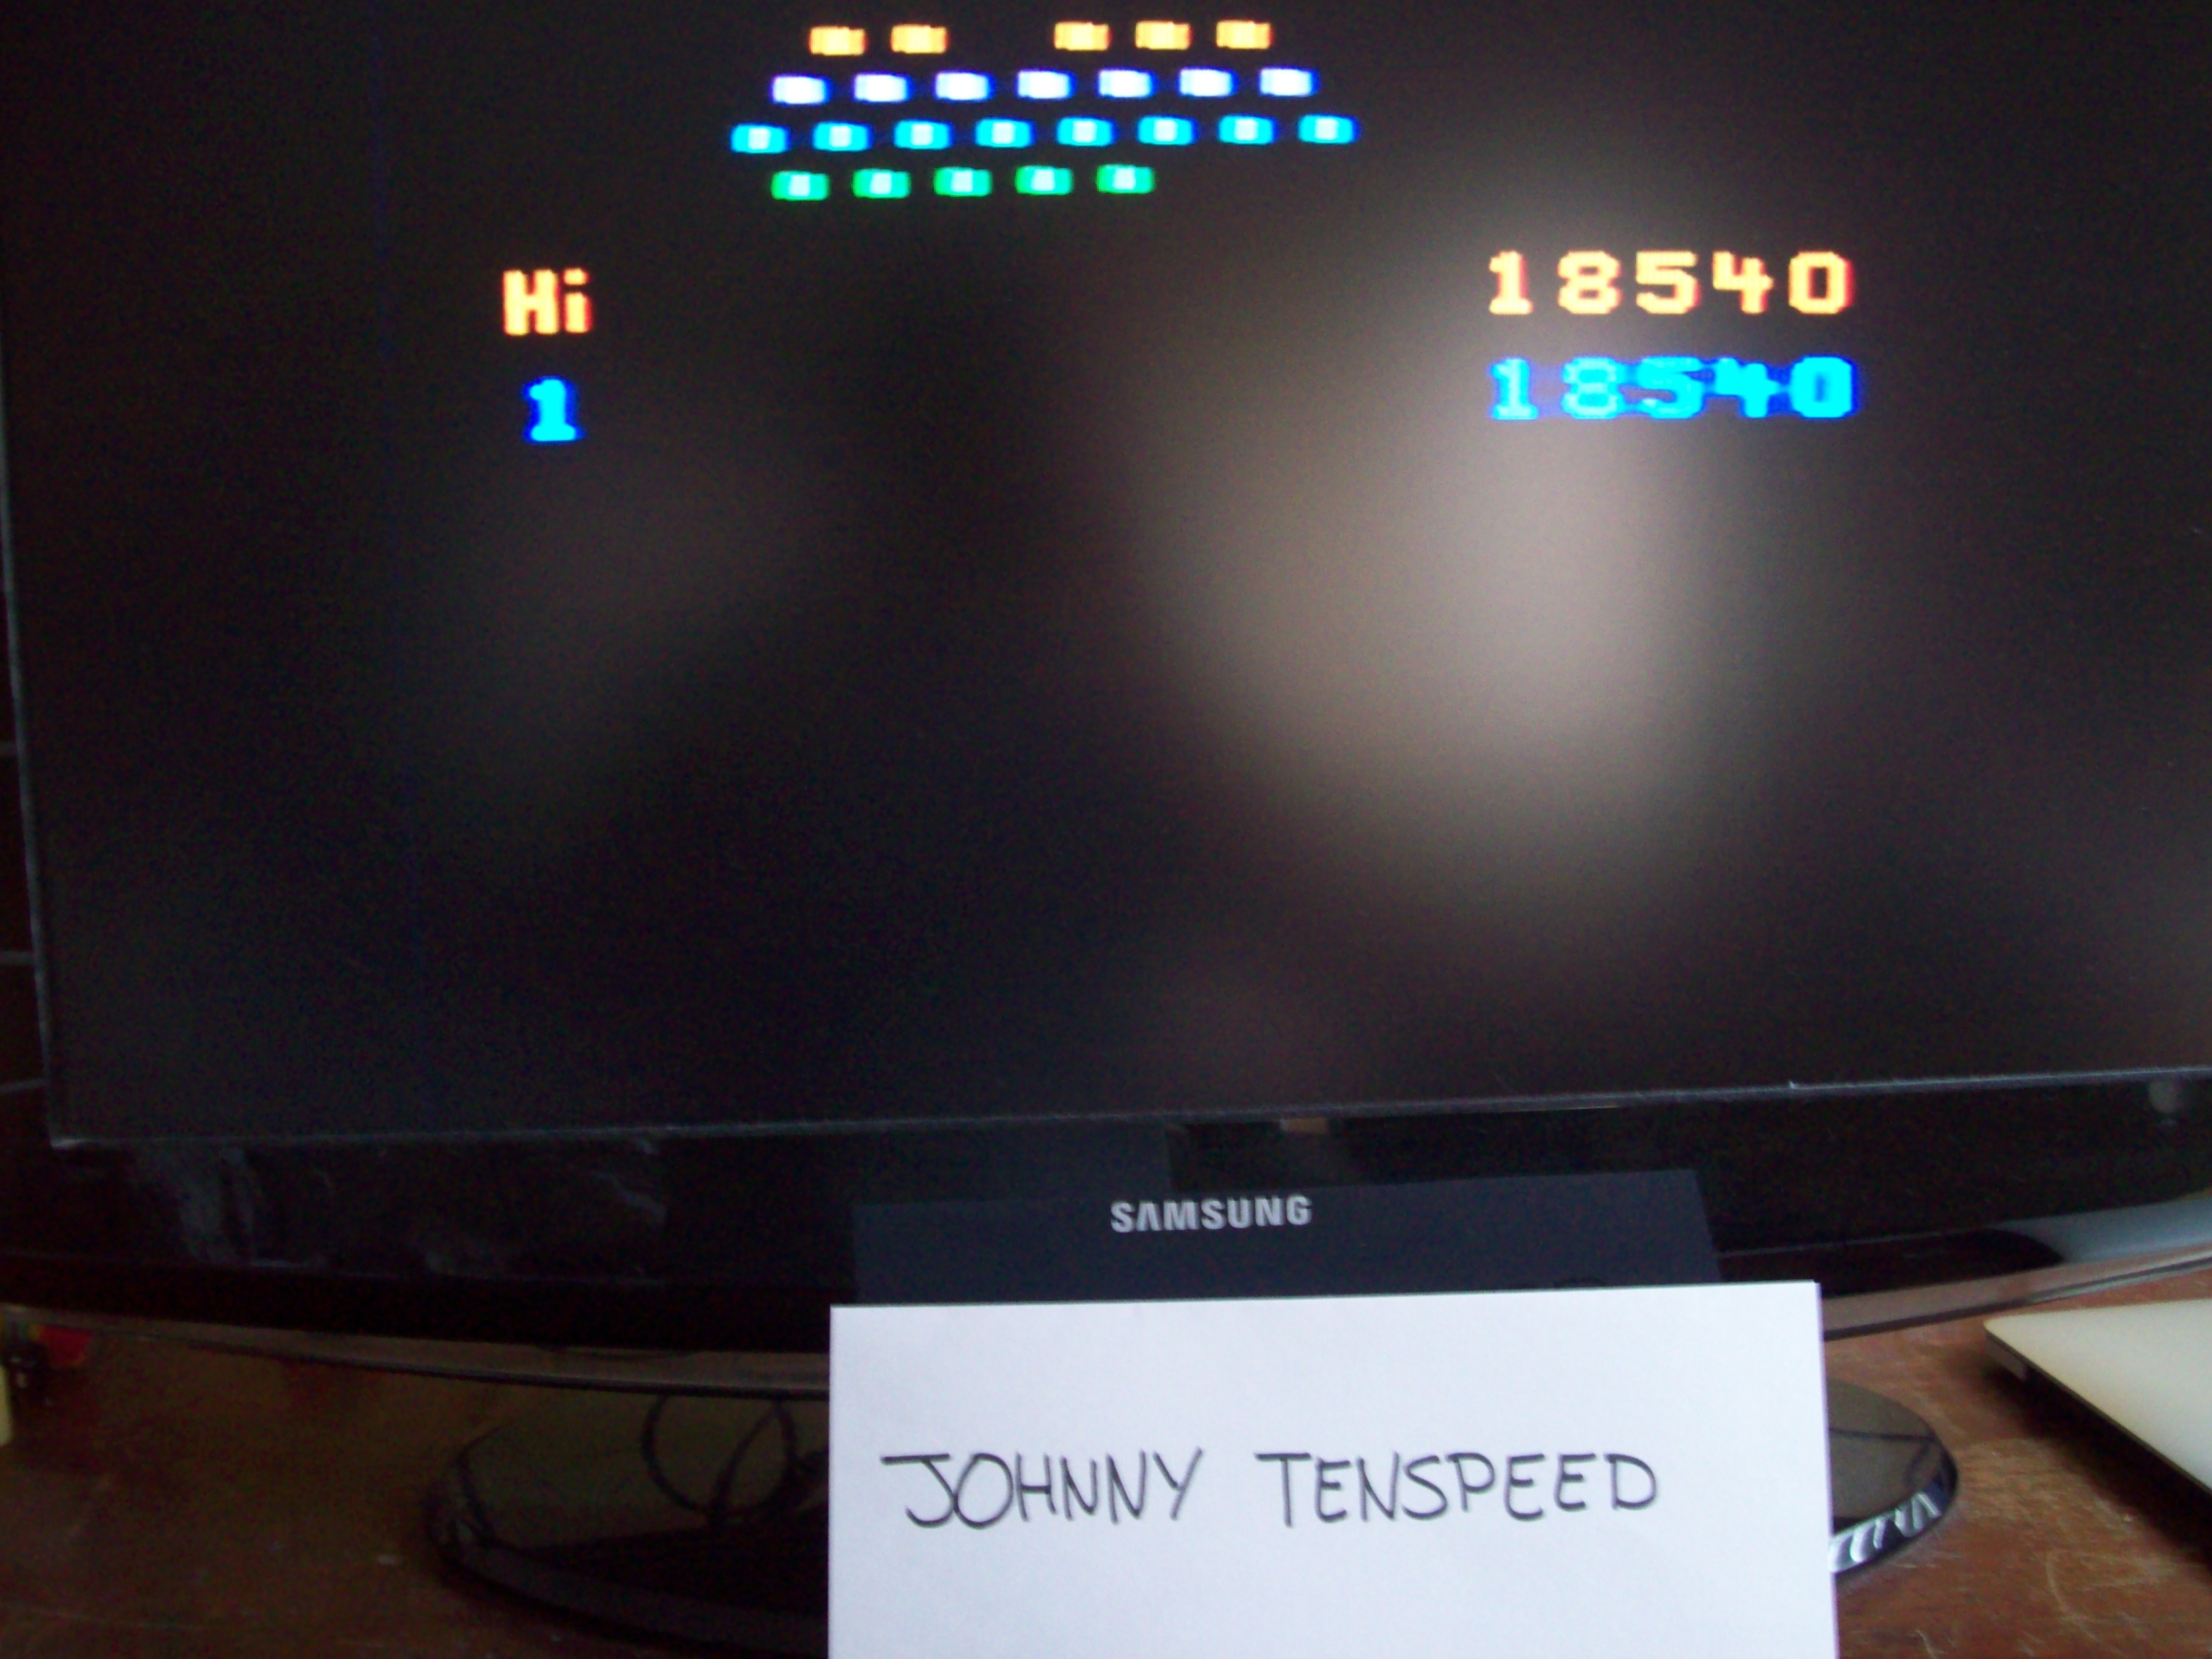 JohnnyTenspeed: Communist Mutants from Space (Atari 2600 Novice/B) 18,540 points on 2015-03-05 14:02:57